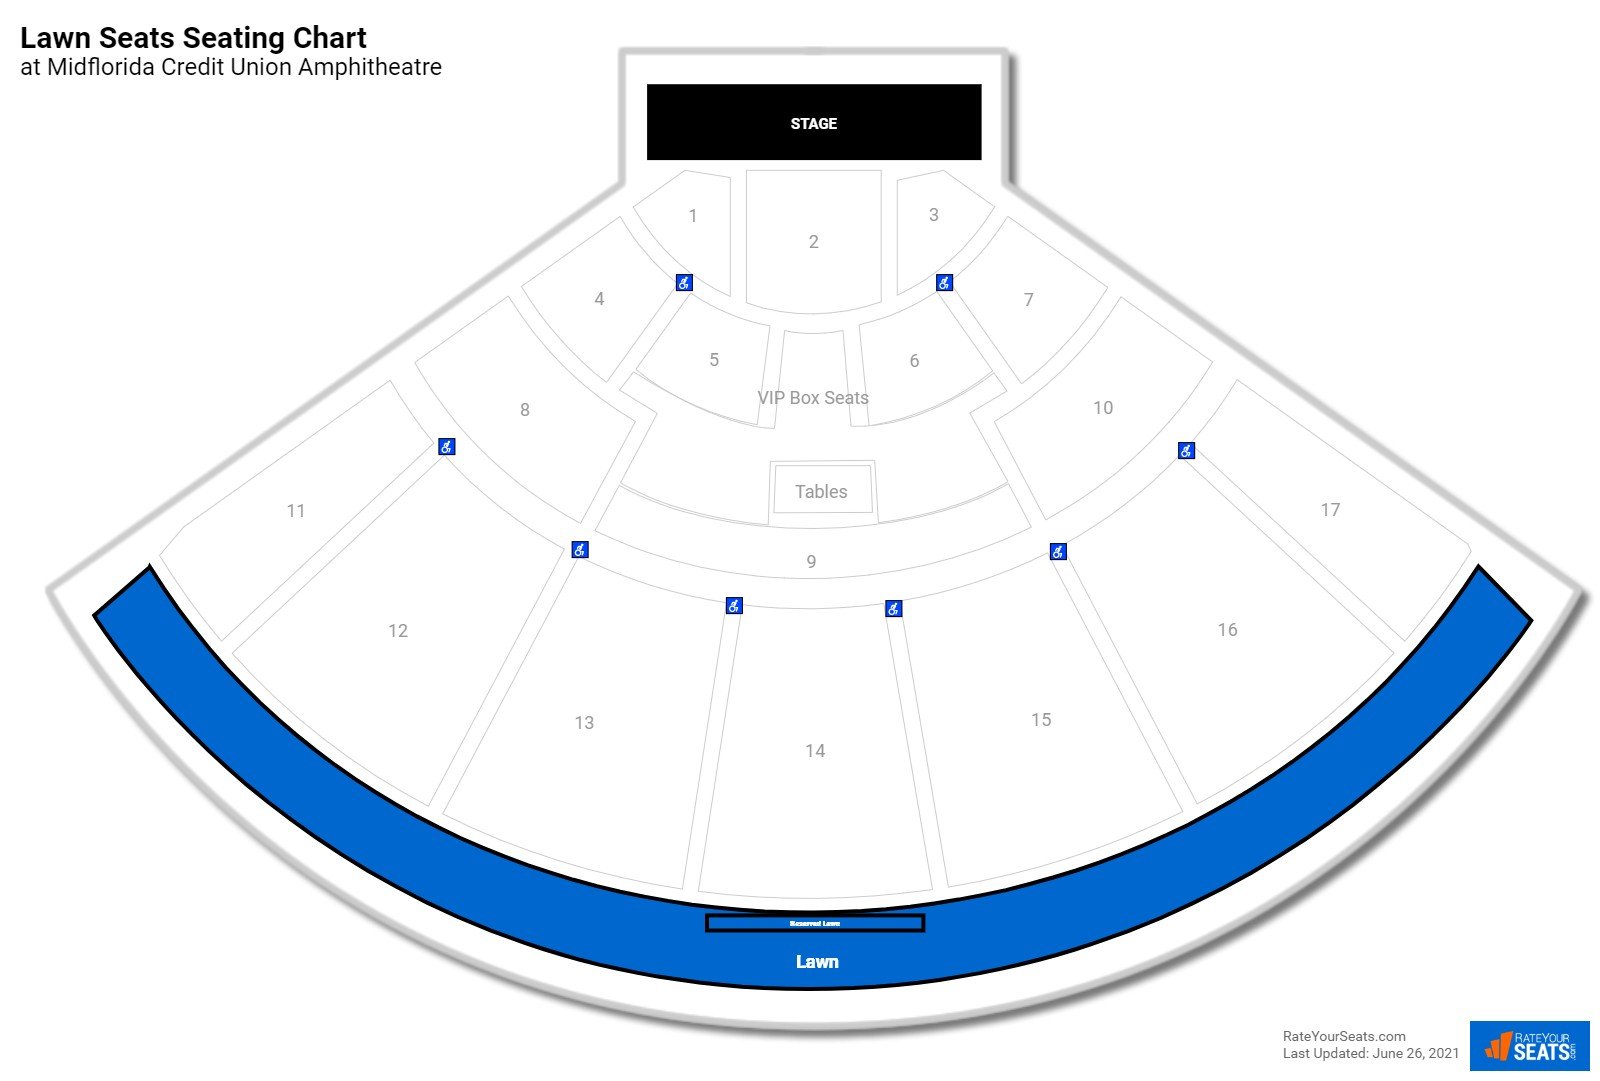 Concert Lawn Seats Seating Chart at Midflorida Credit Union Amphitheatre